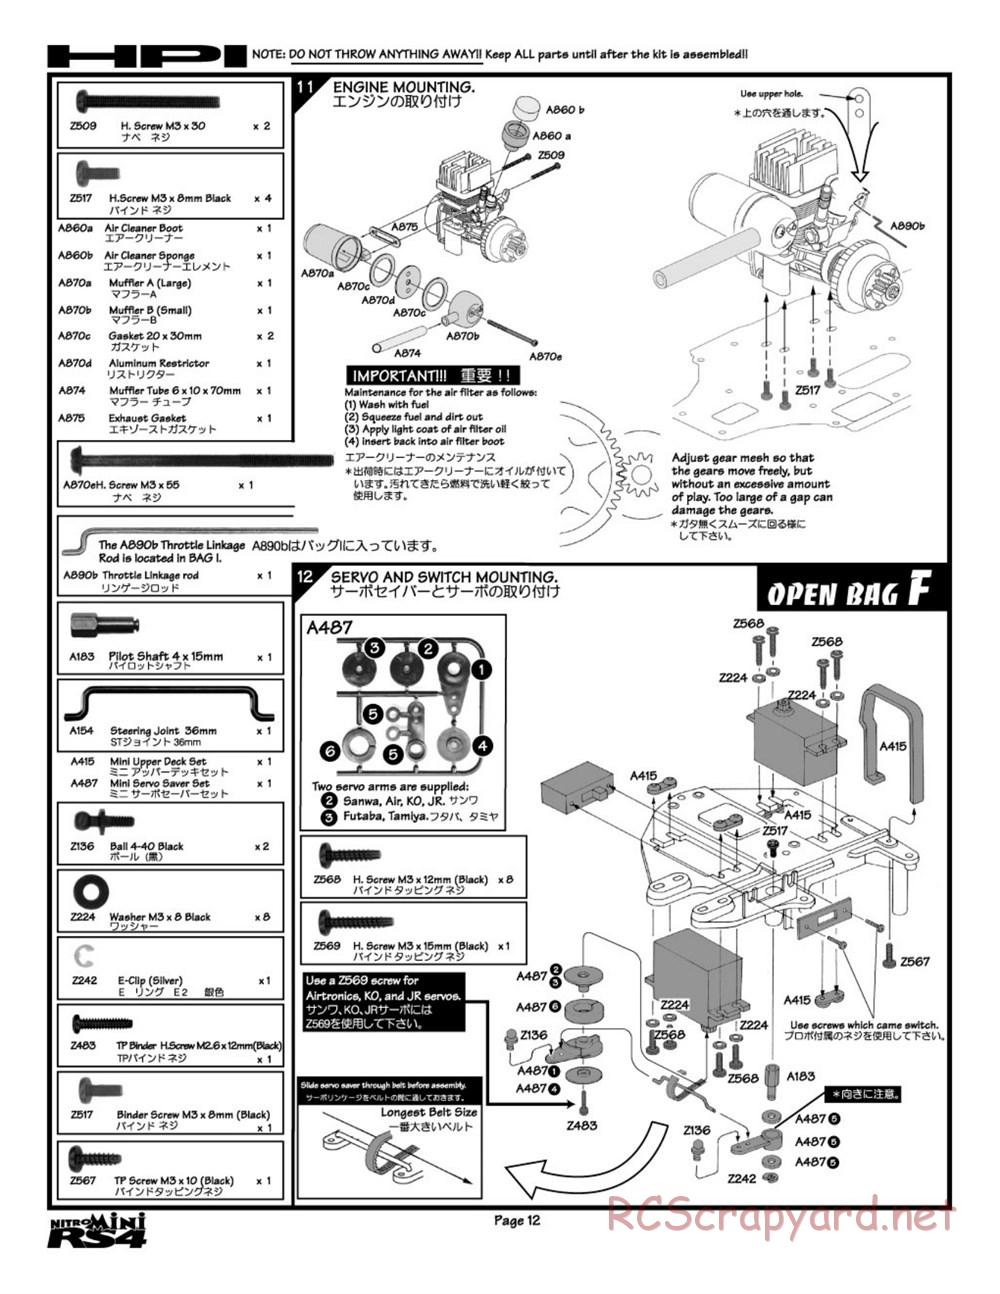 HPI - Nitro RS4 Mini - Manual - Page 12